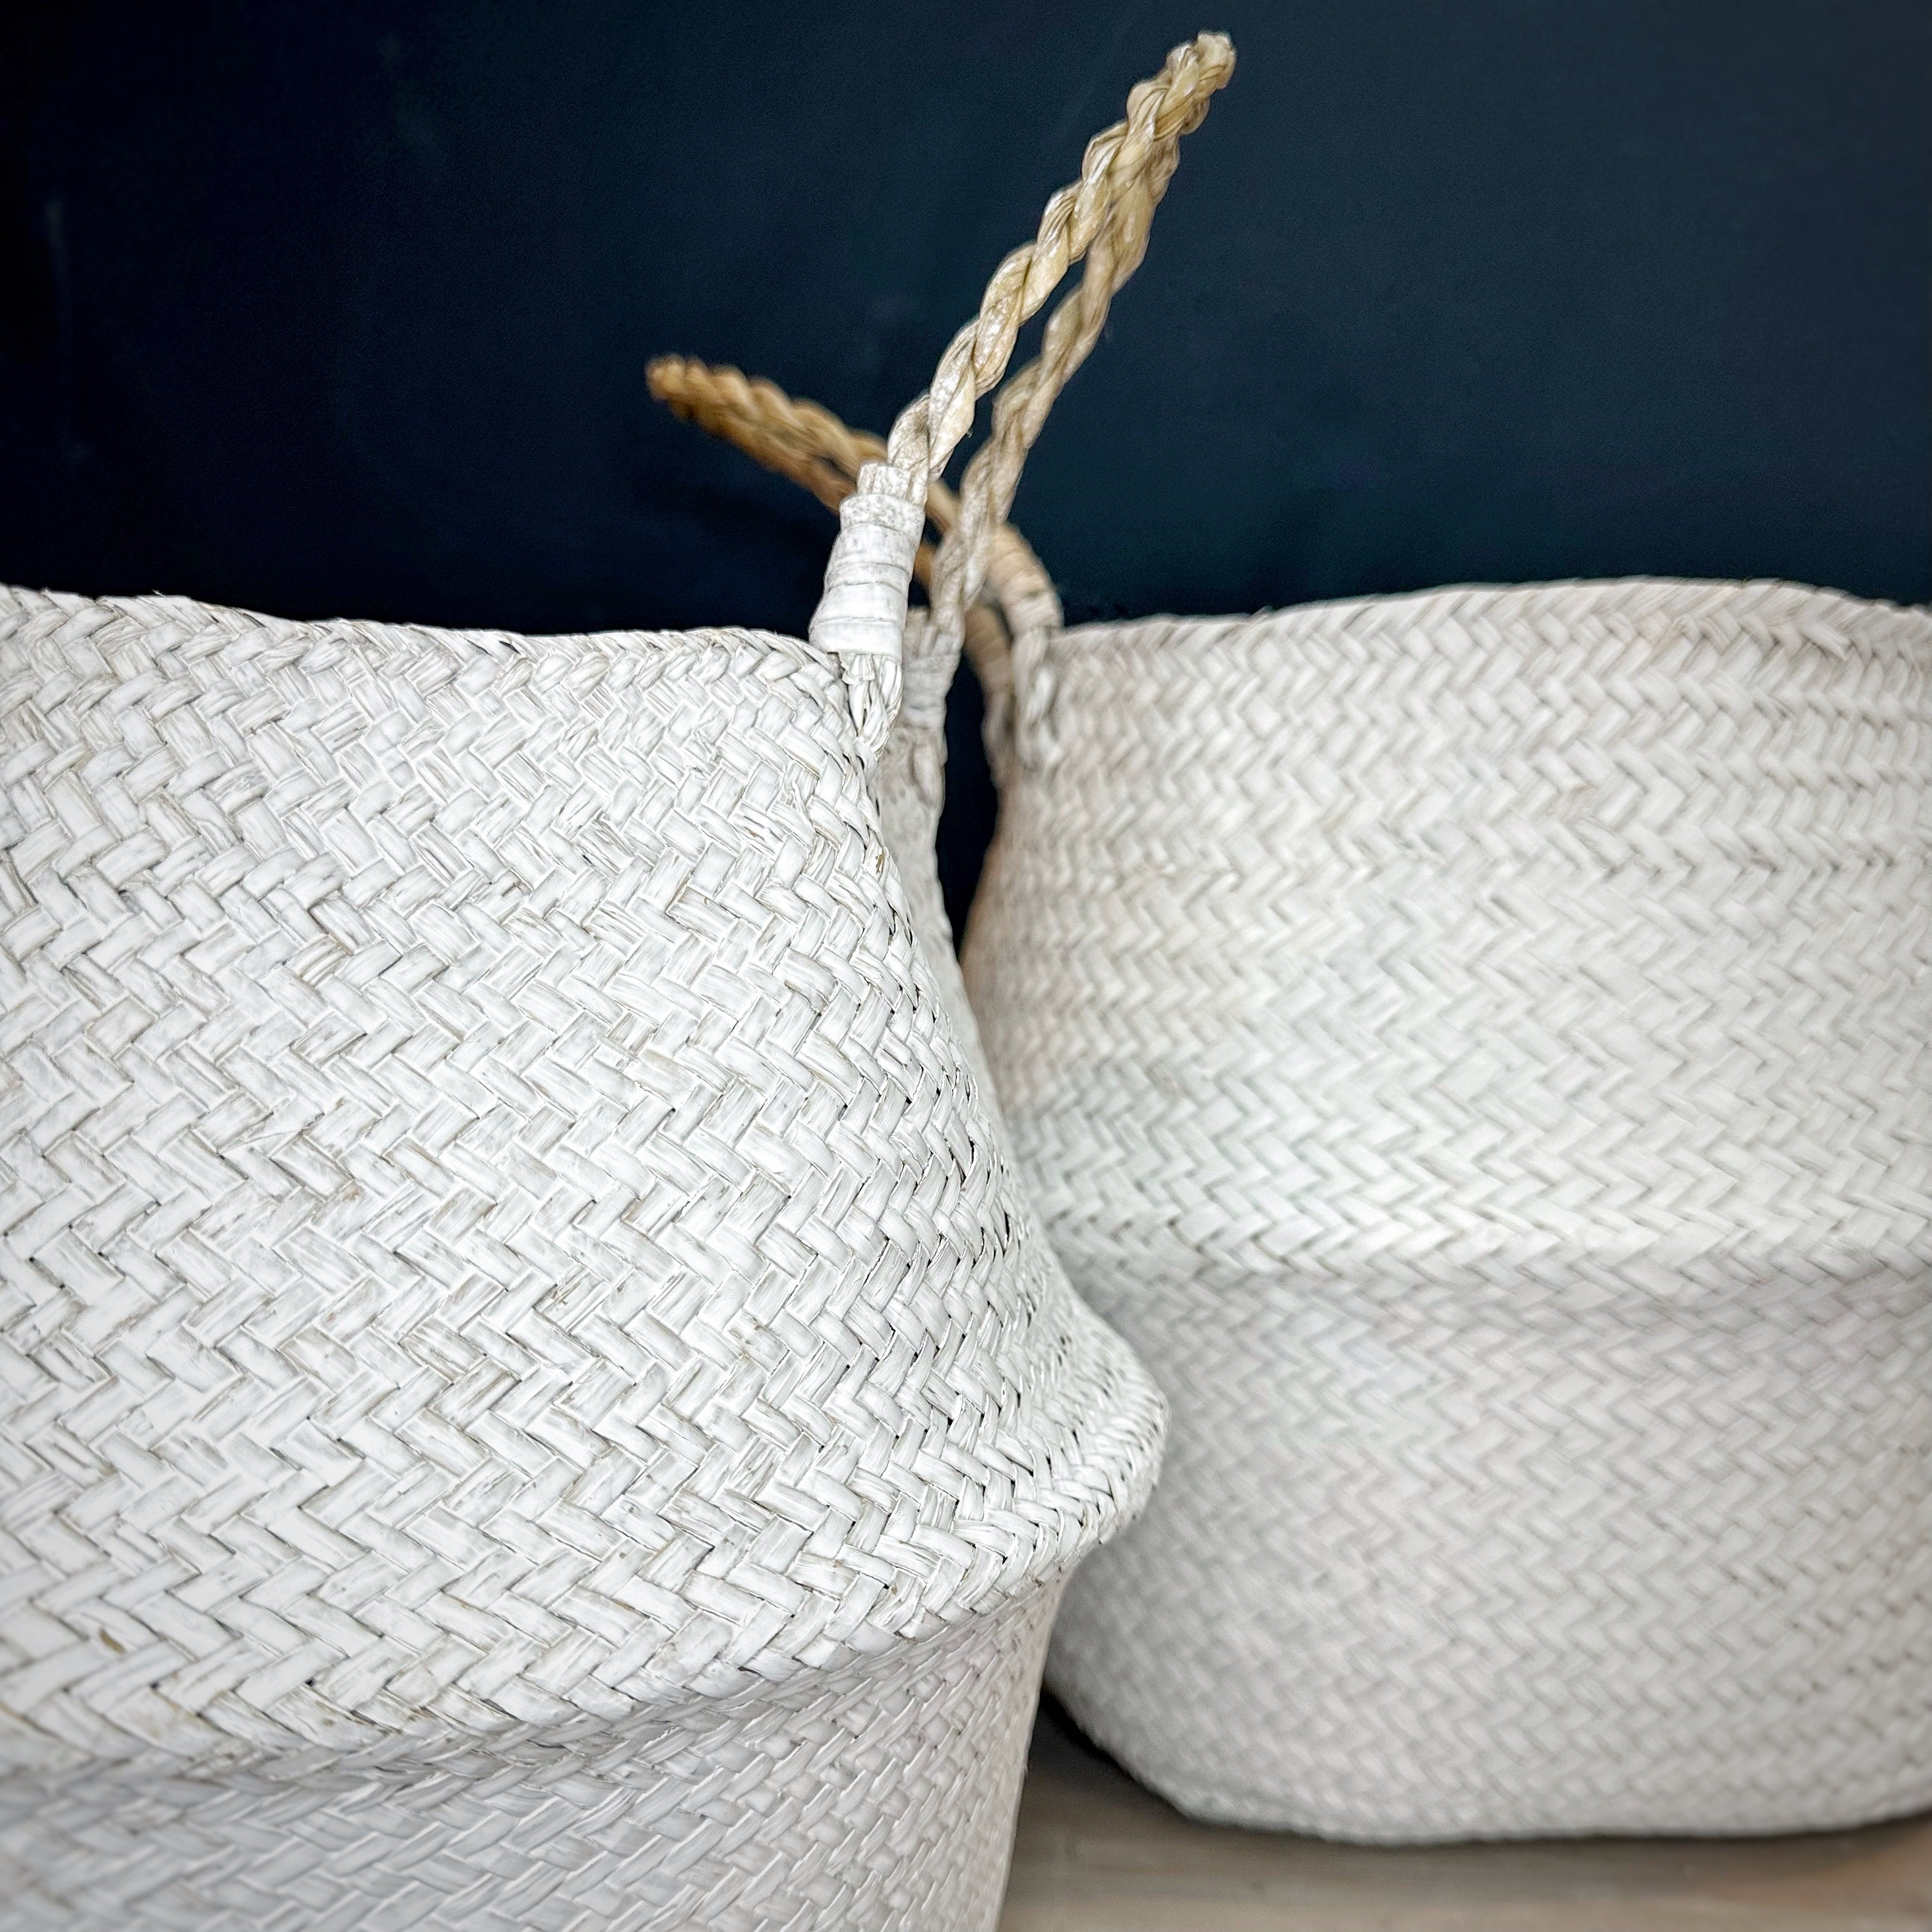 Set of 2 White Grass Baskets